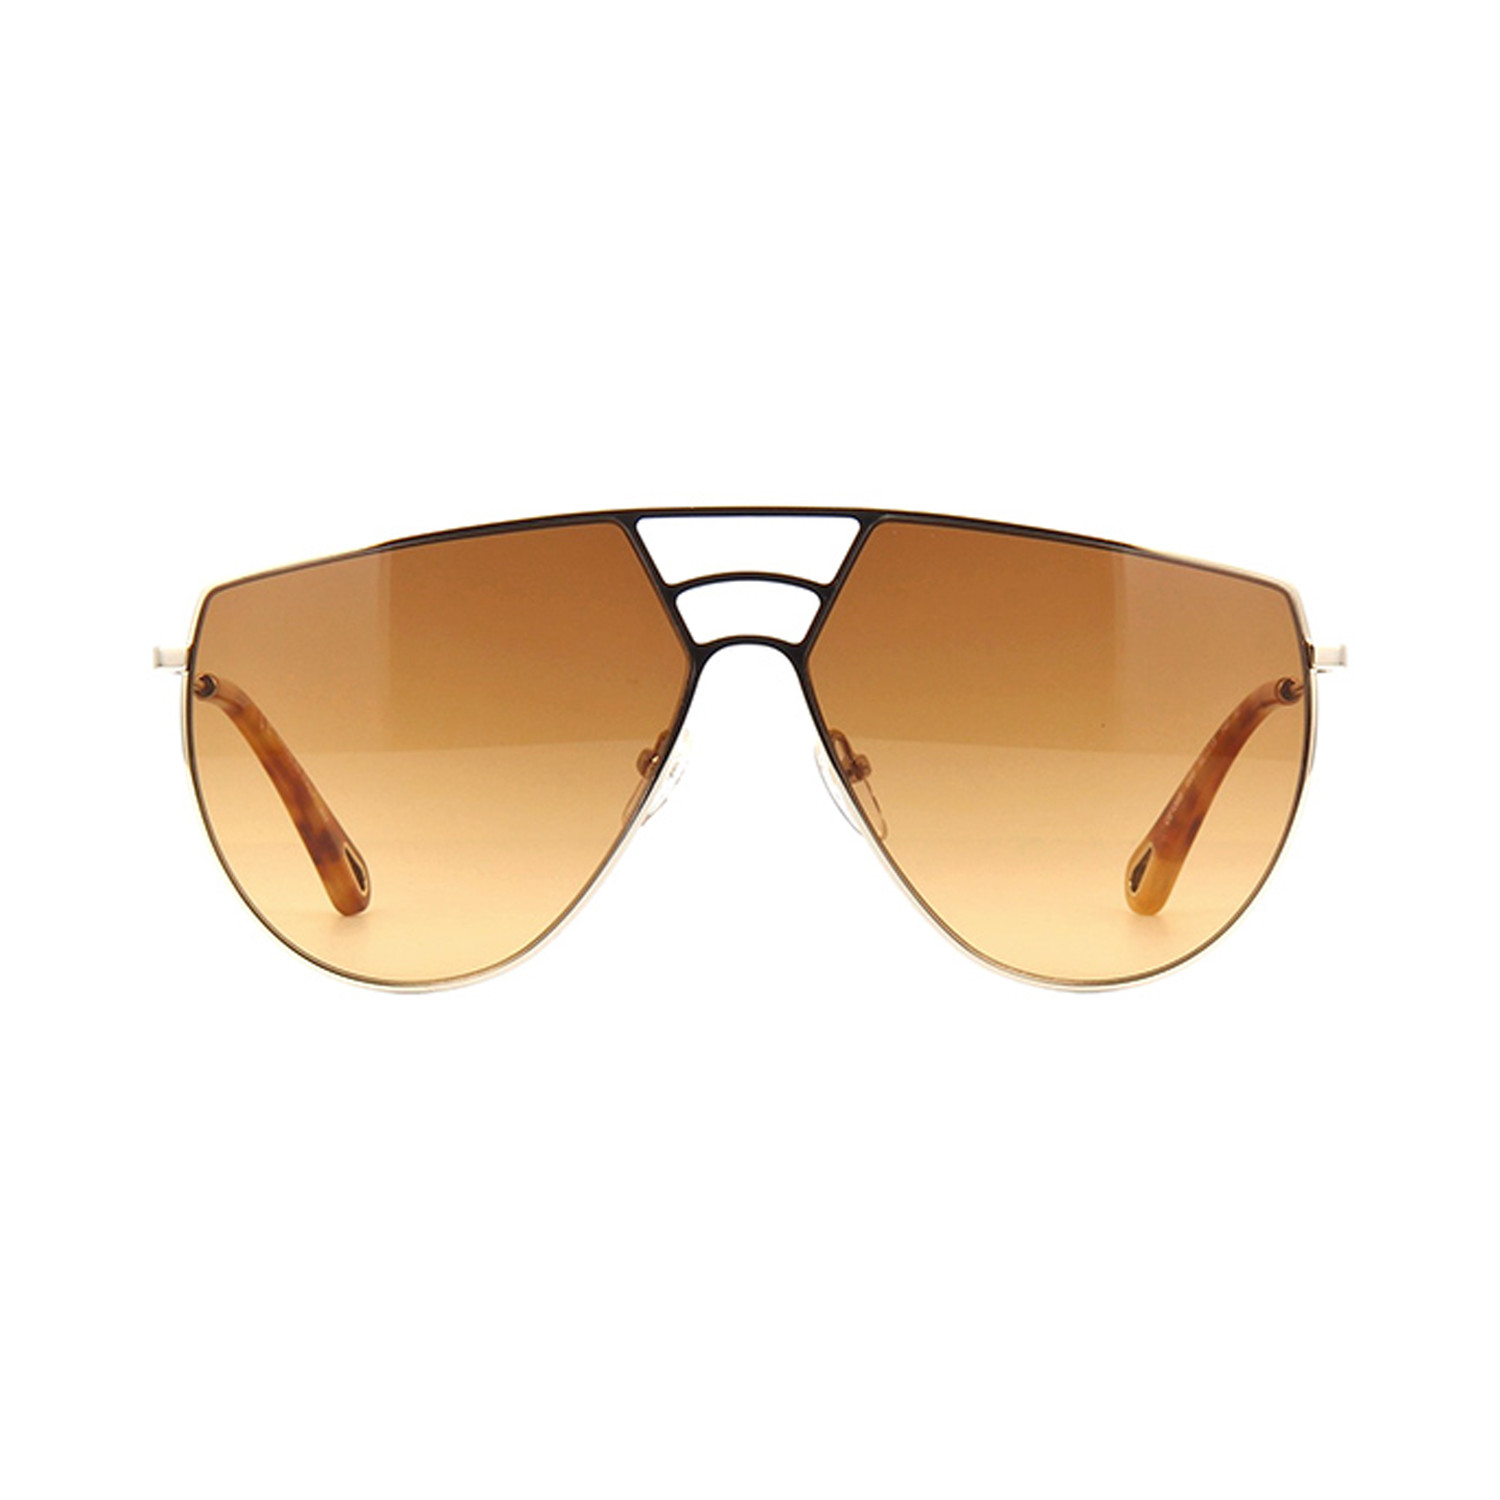 Chloe // Aviator Sunglasses // Gold + Brown - Women's Designer ...